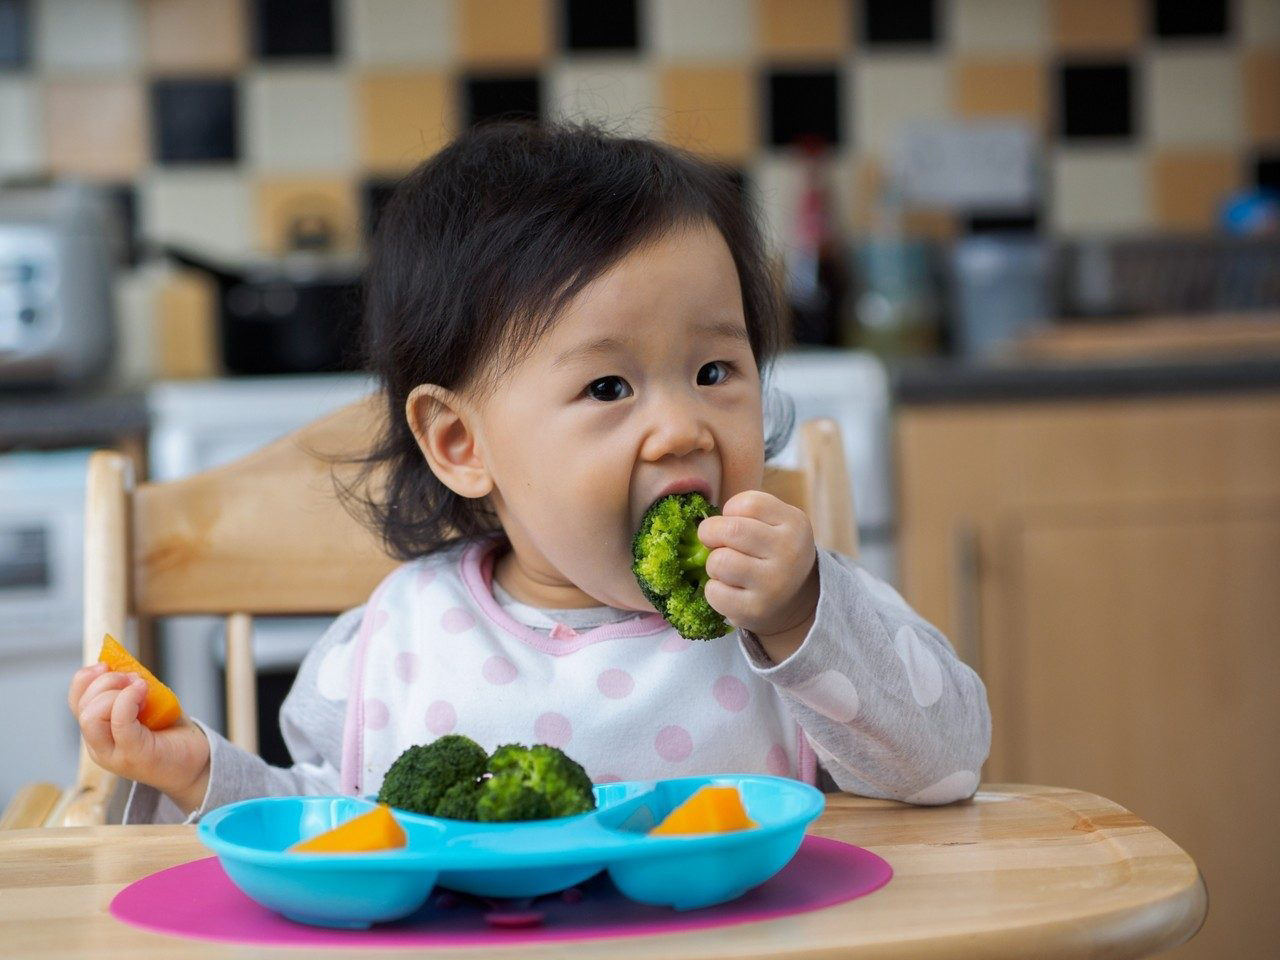 Toddler in highchair enjoying a piece of broccoli